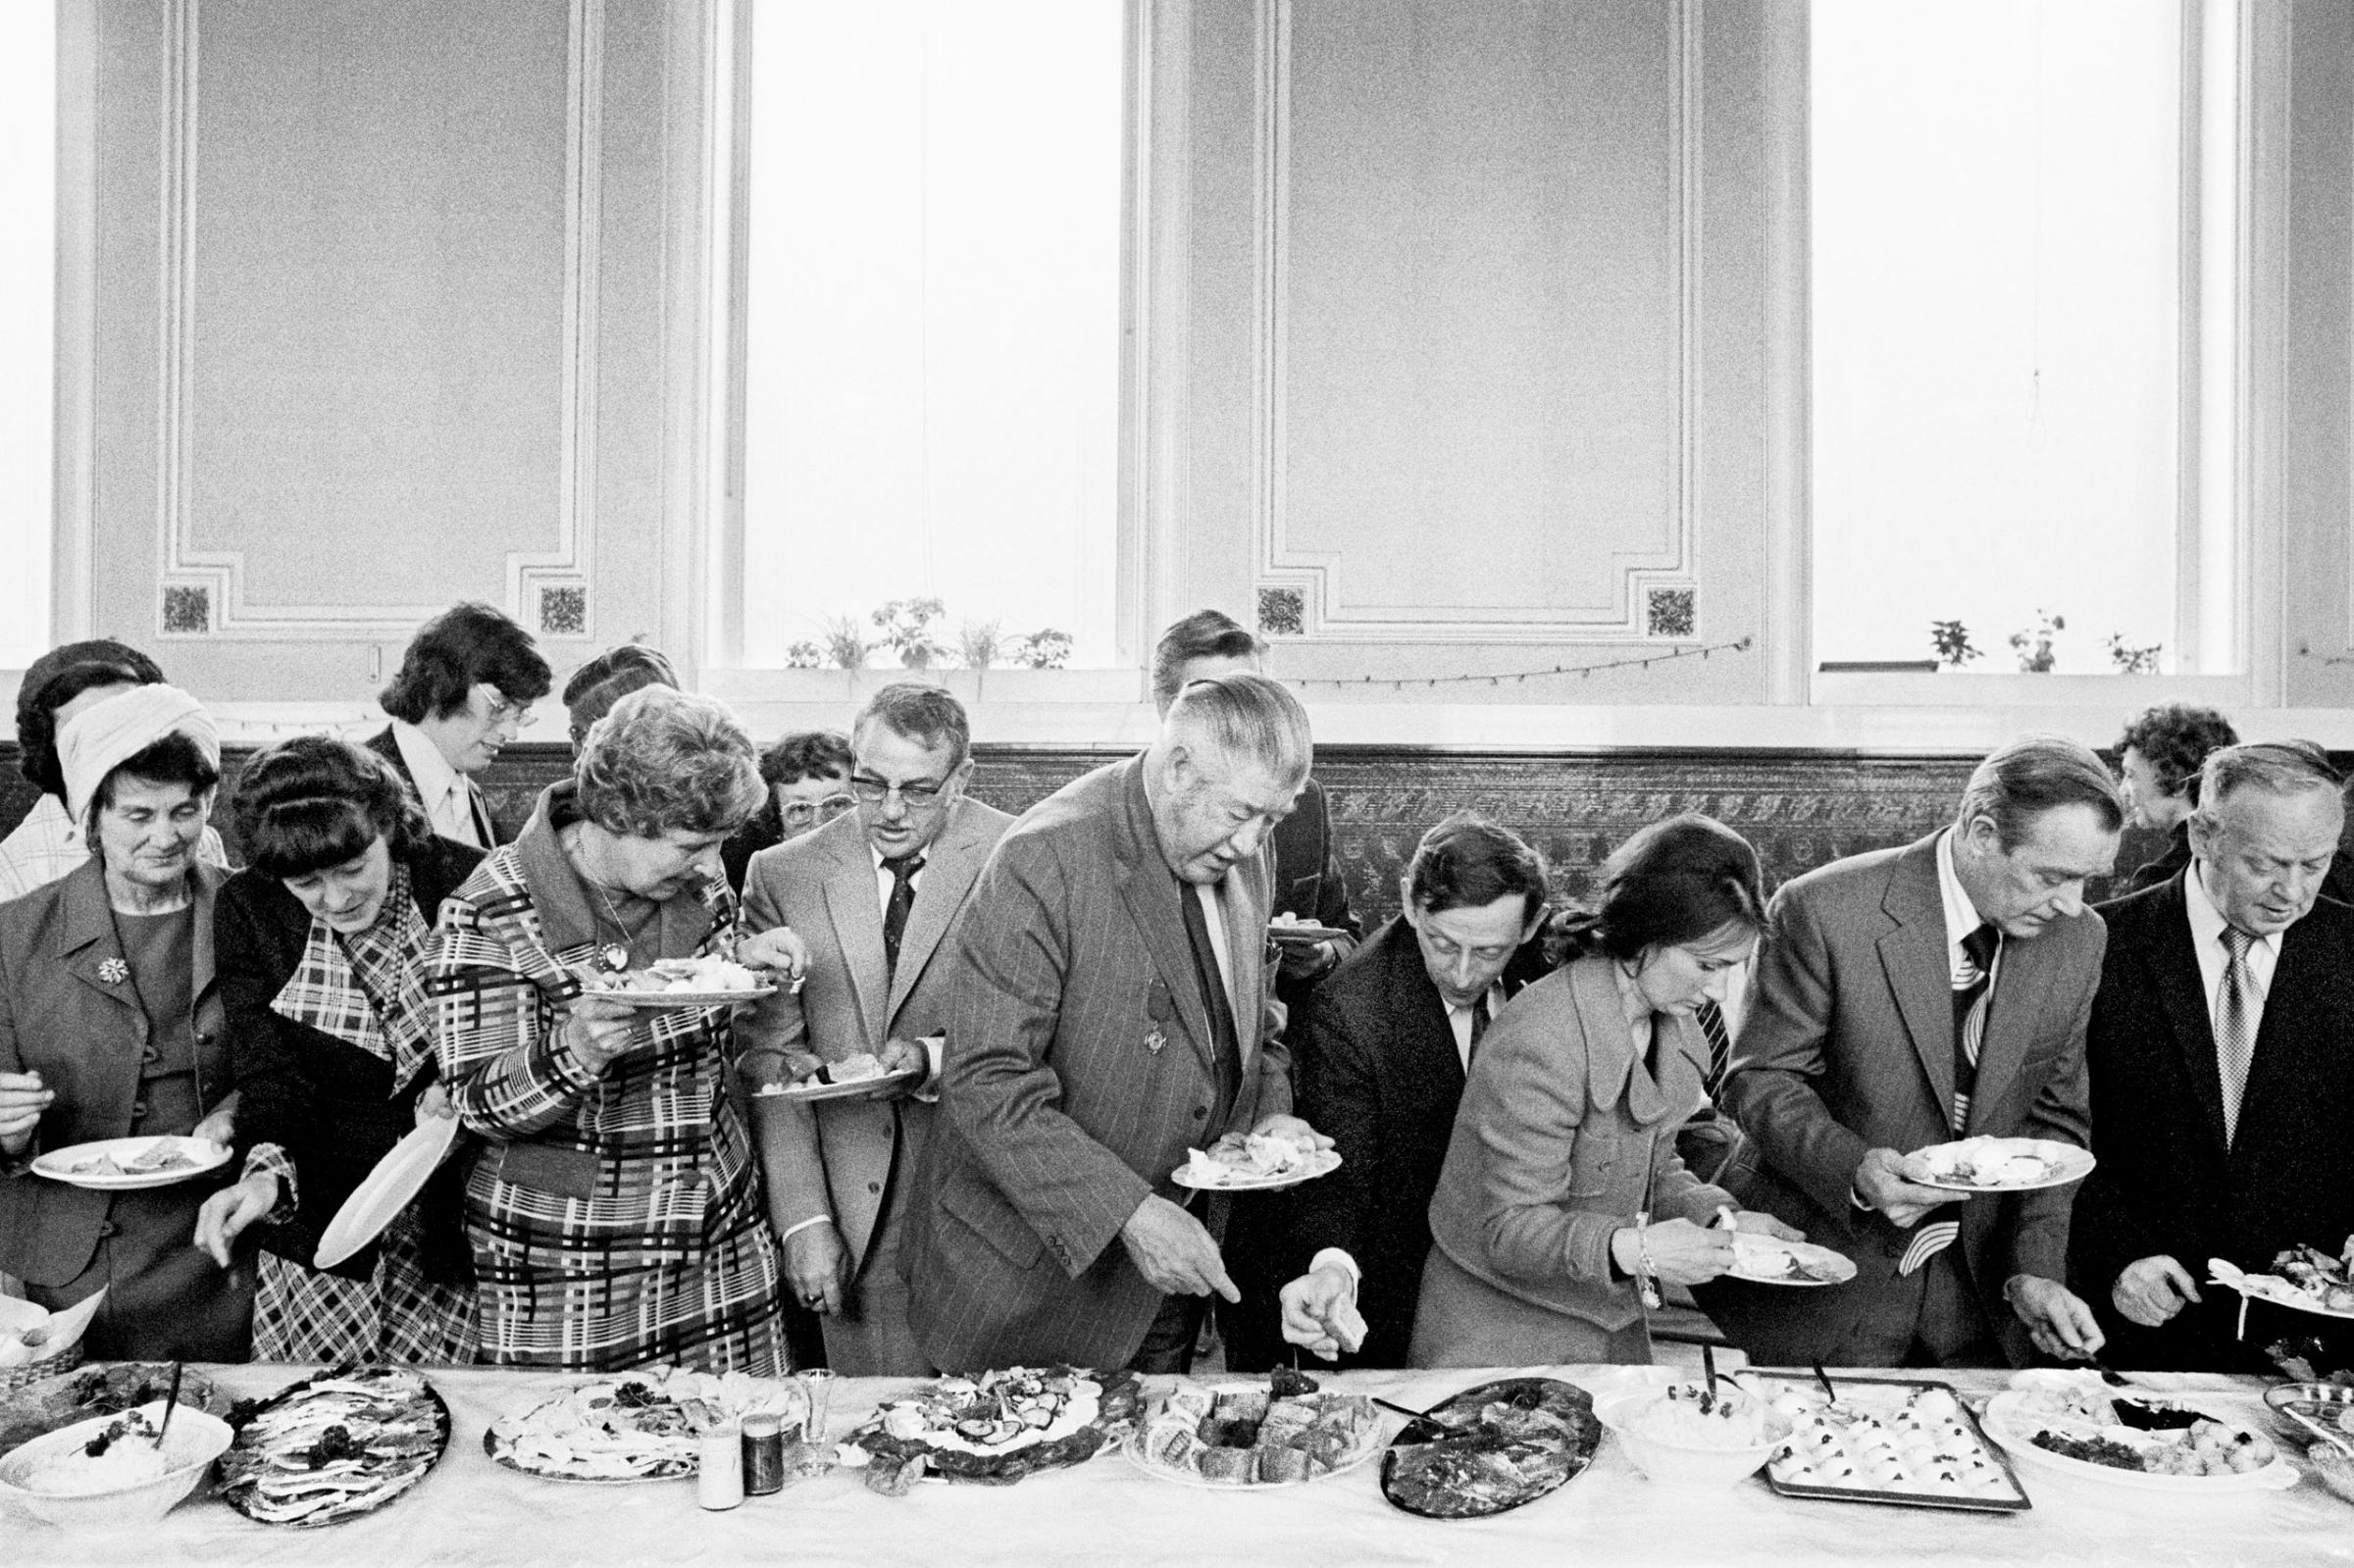 Mayor of Todmorden's inaugural banquet, Calderdale, 1977